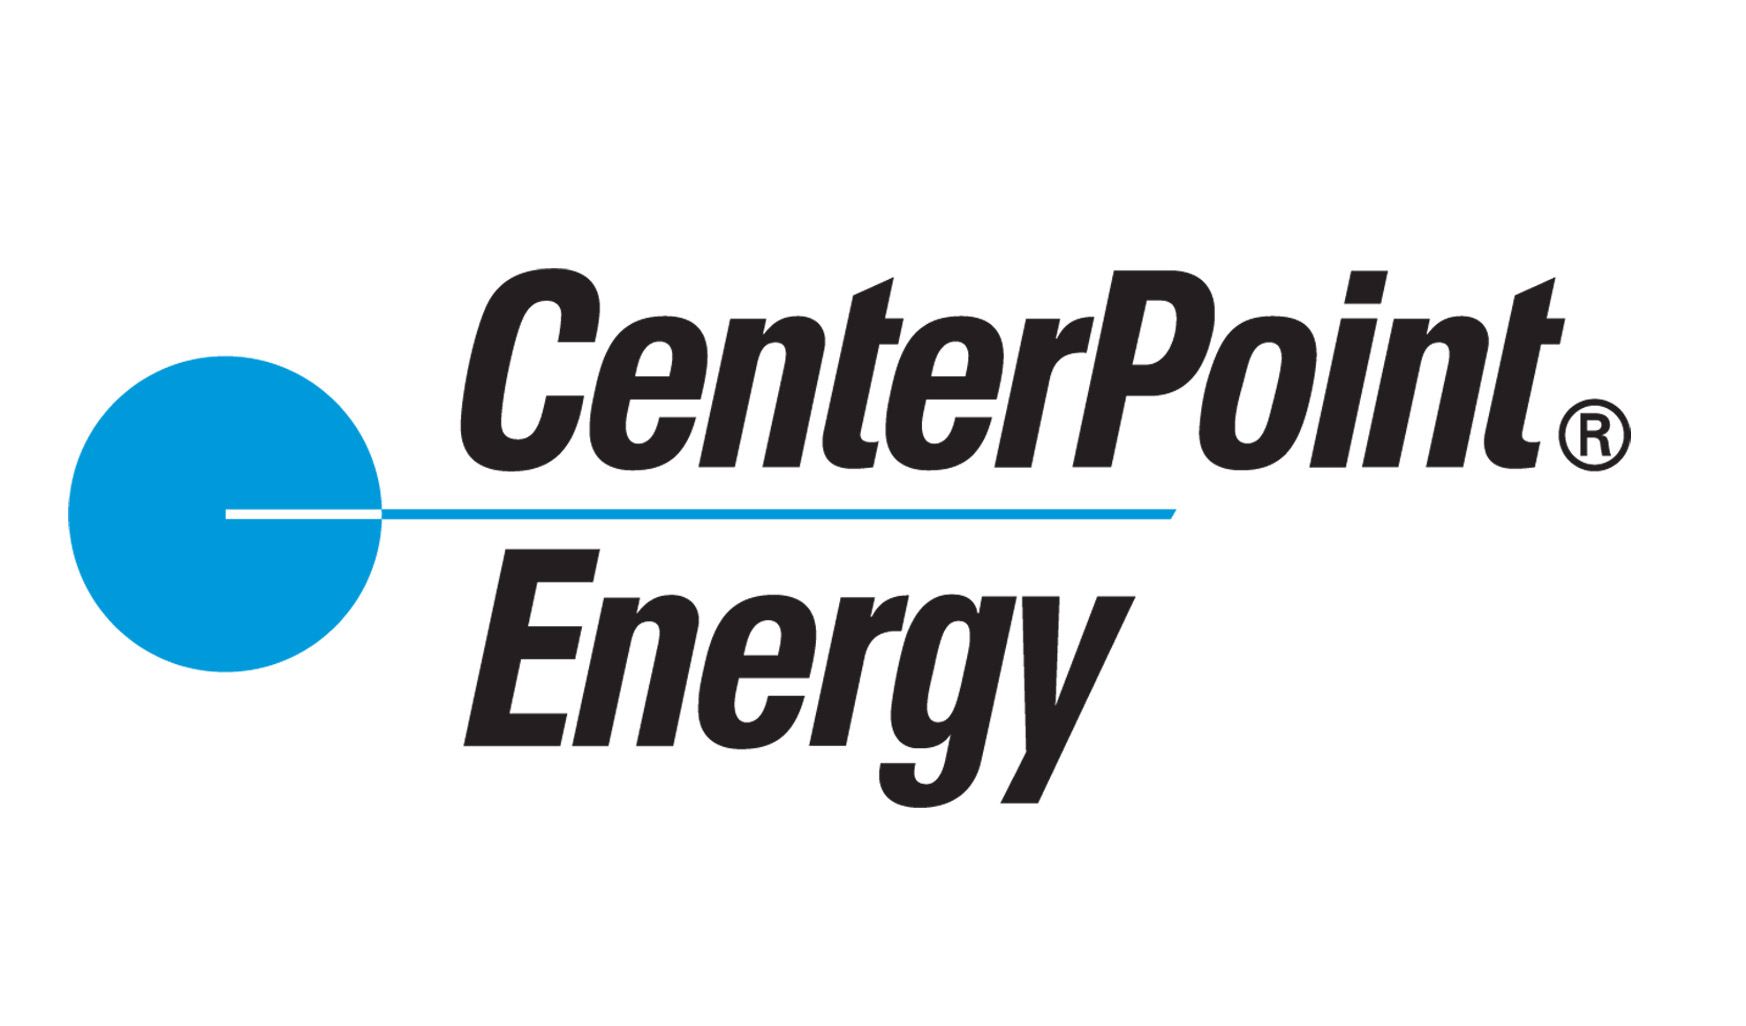 Centerpoint Energy logo